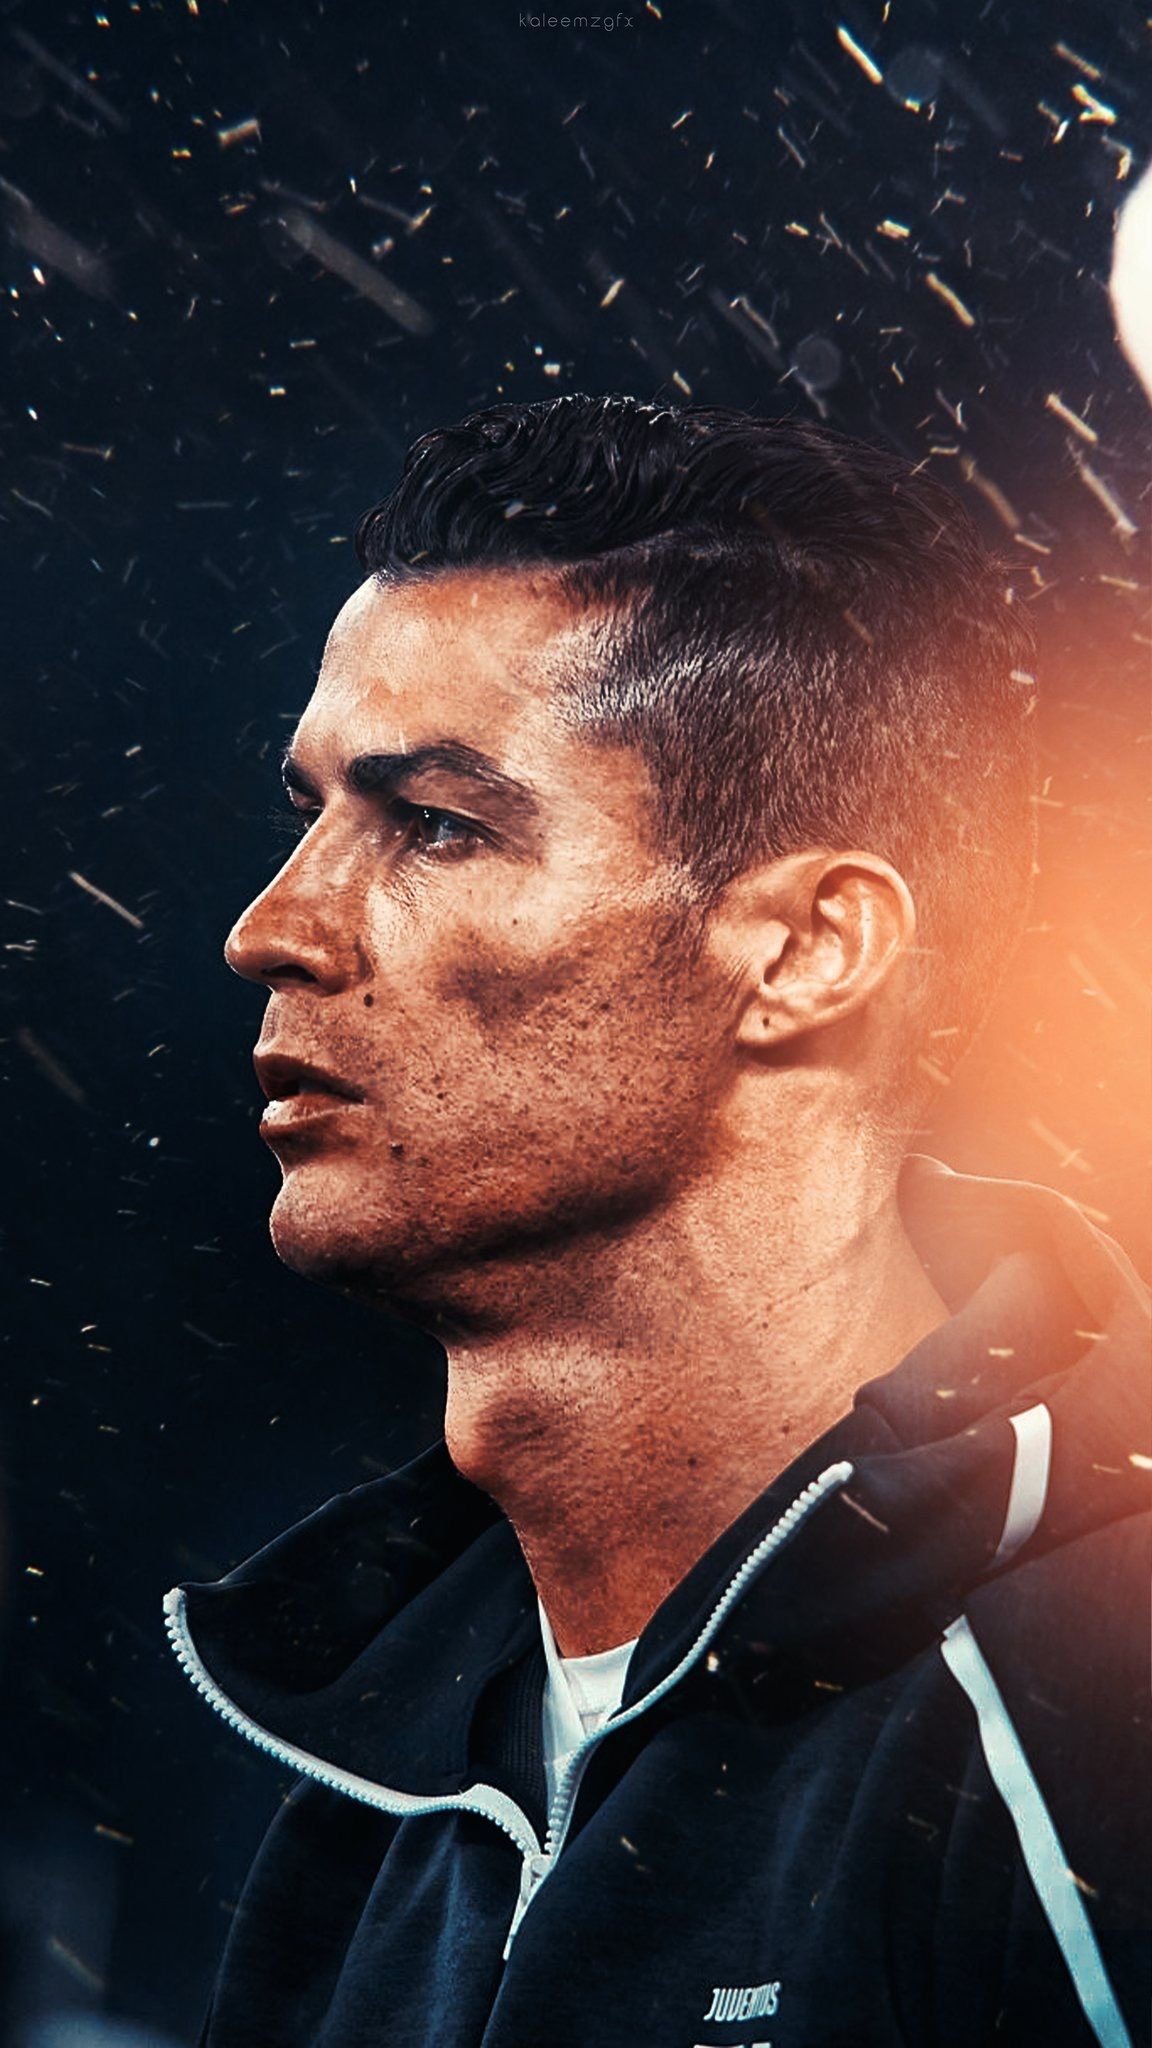 Wallpaper Ronaldo Images